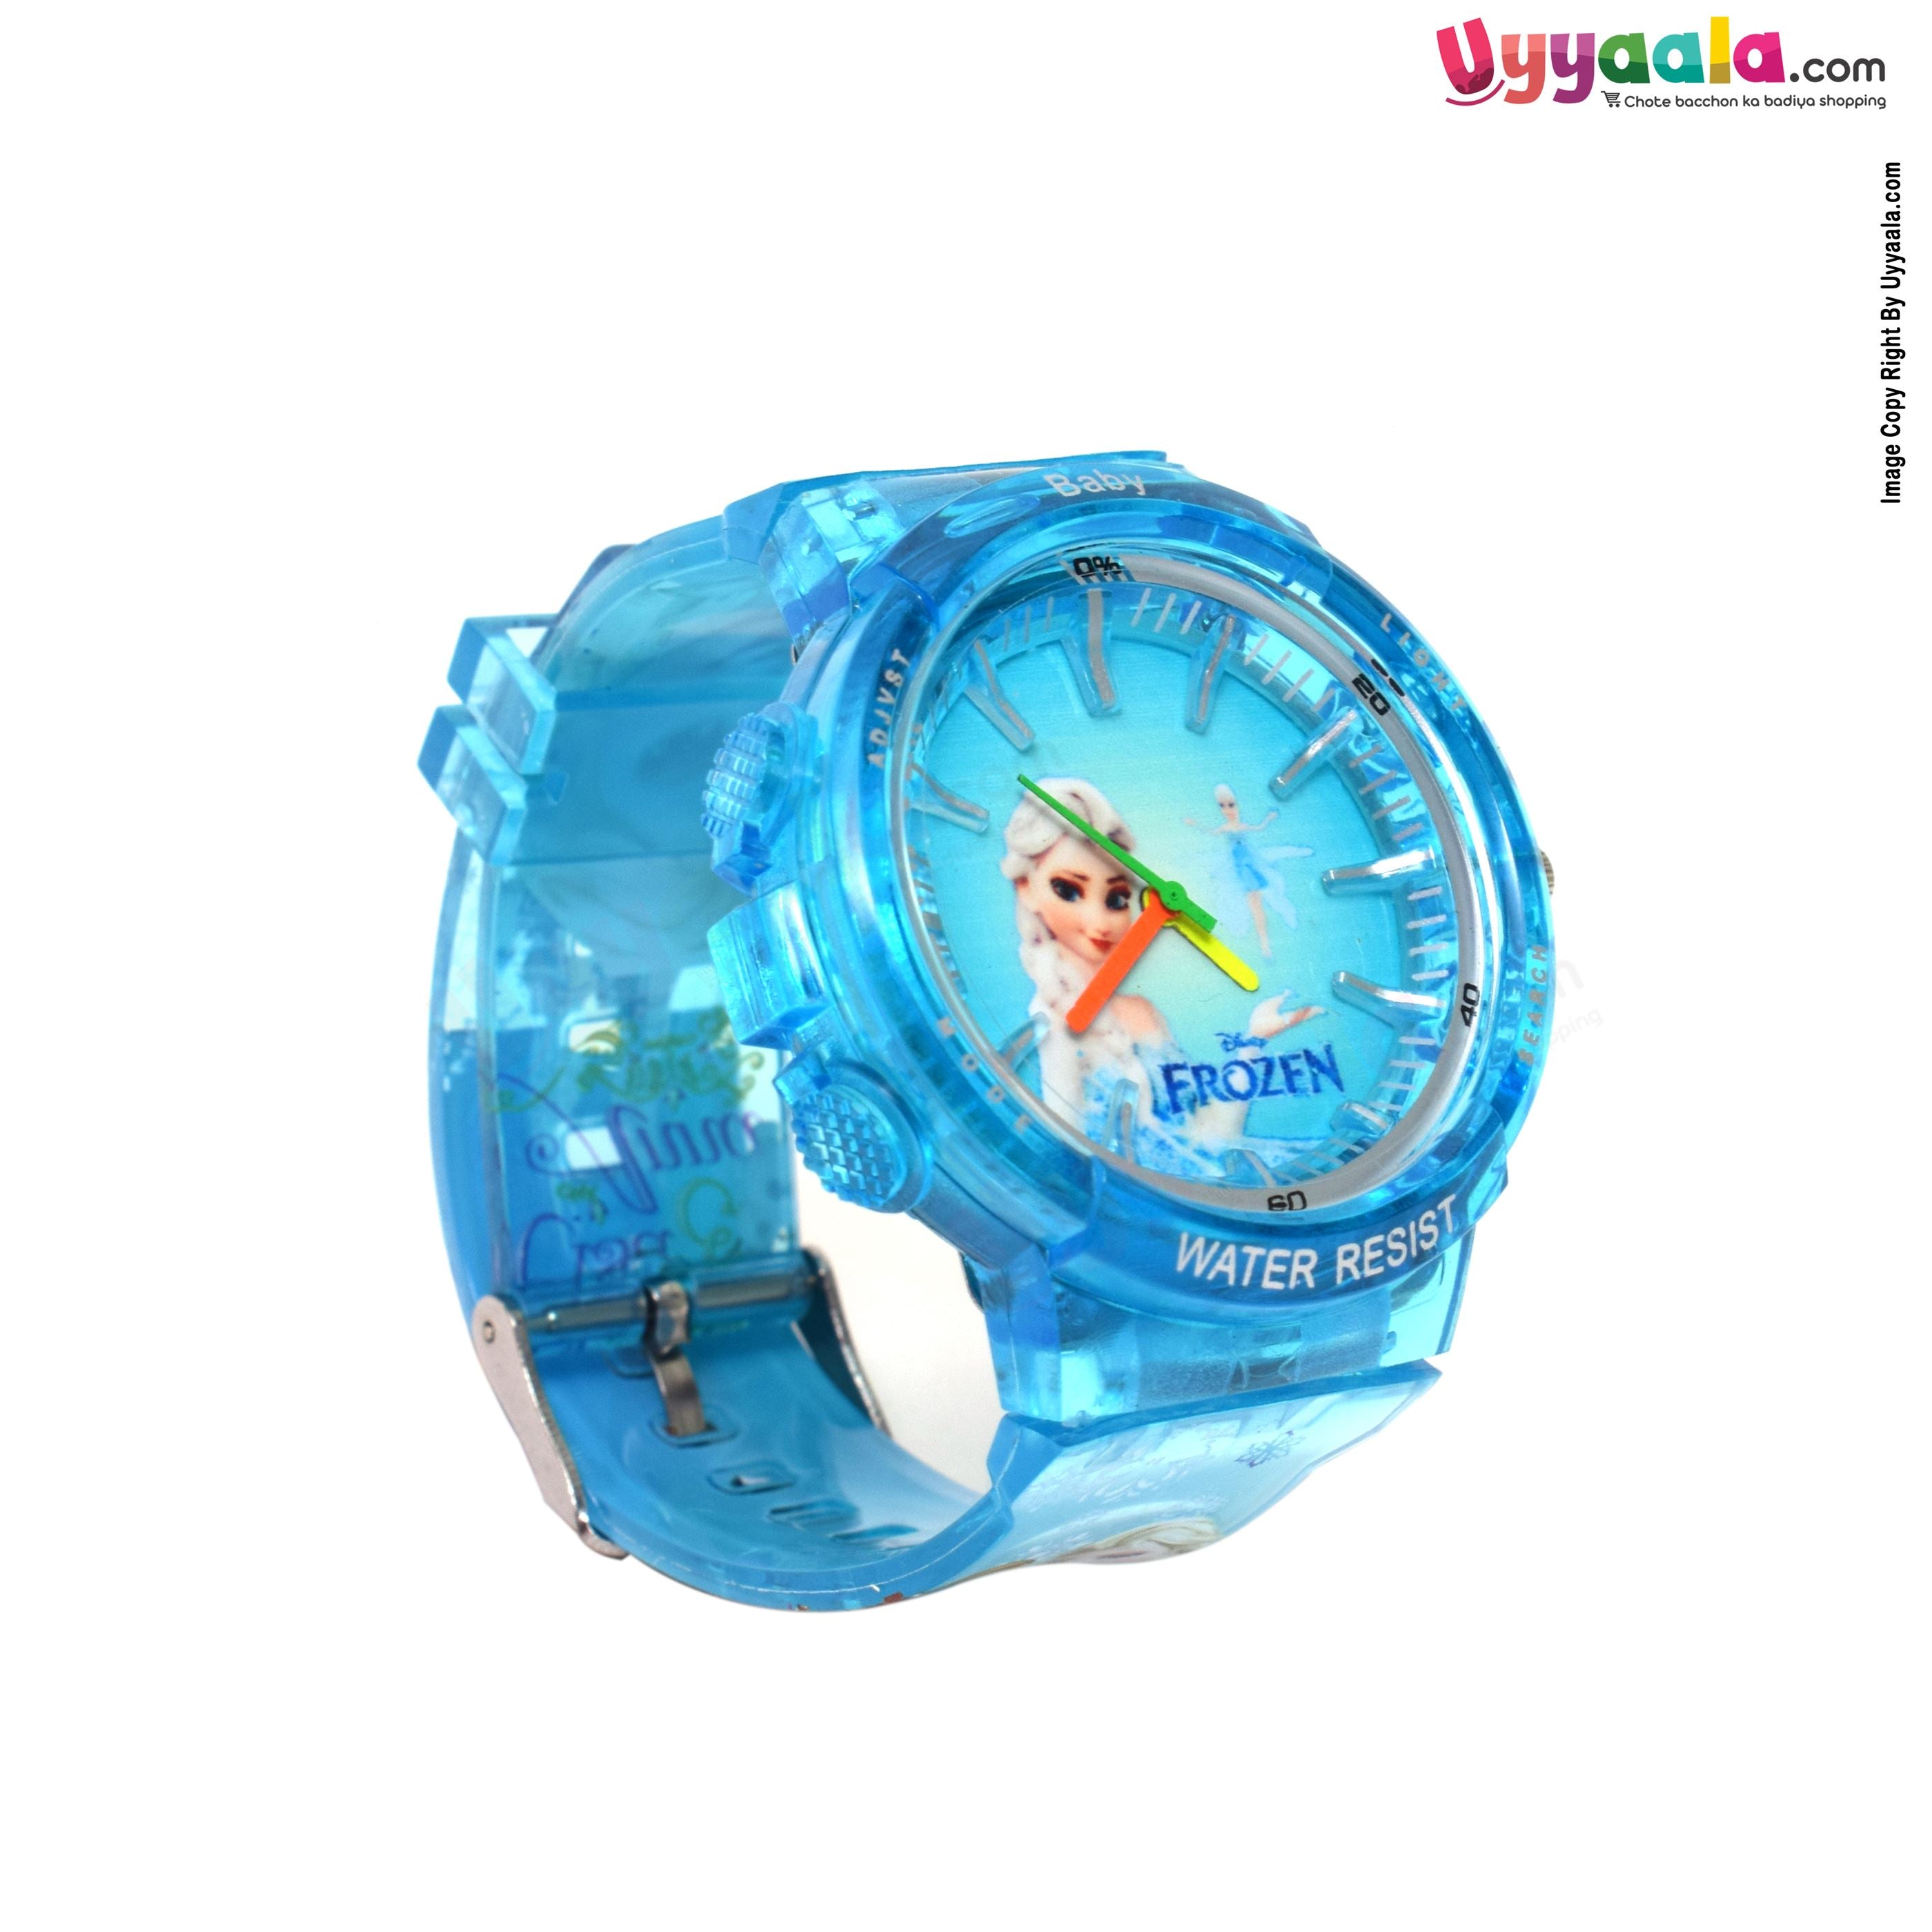 Disney frozen Analog wrist watch for kids - blue with frozen print